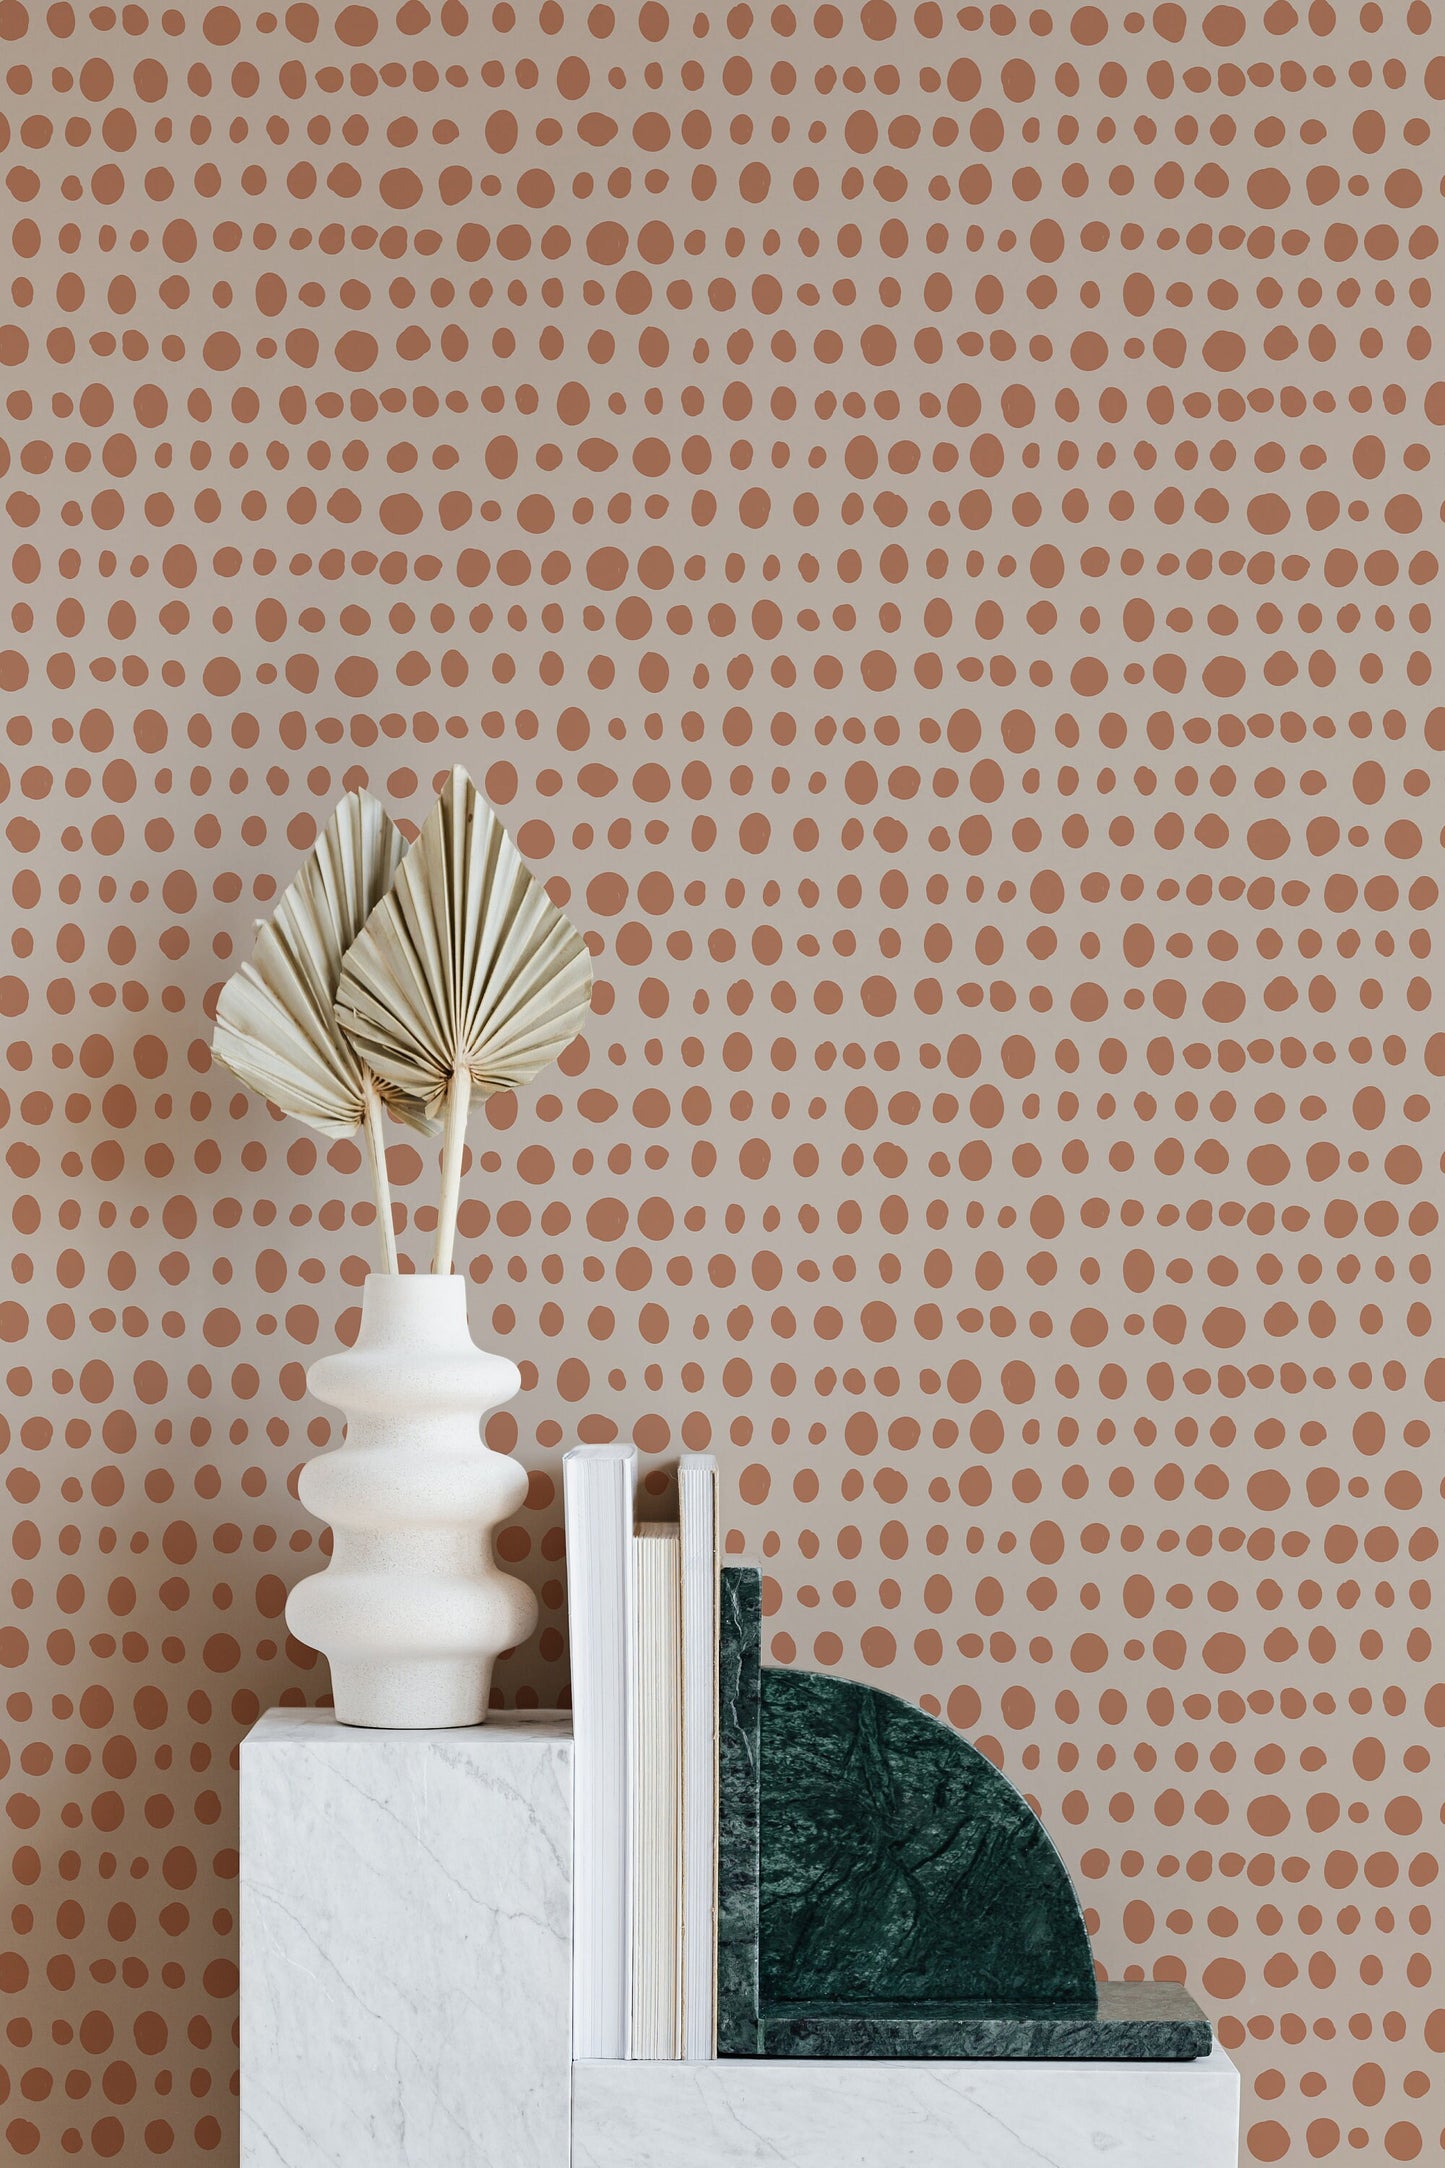 Terracotta Polka Wallpaper